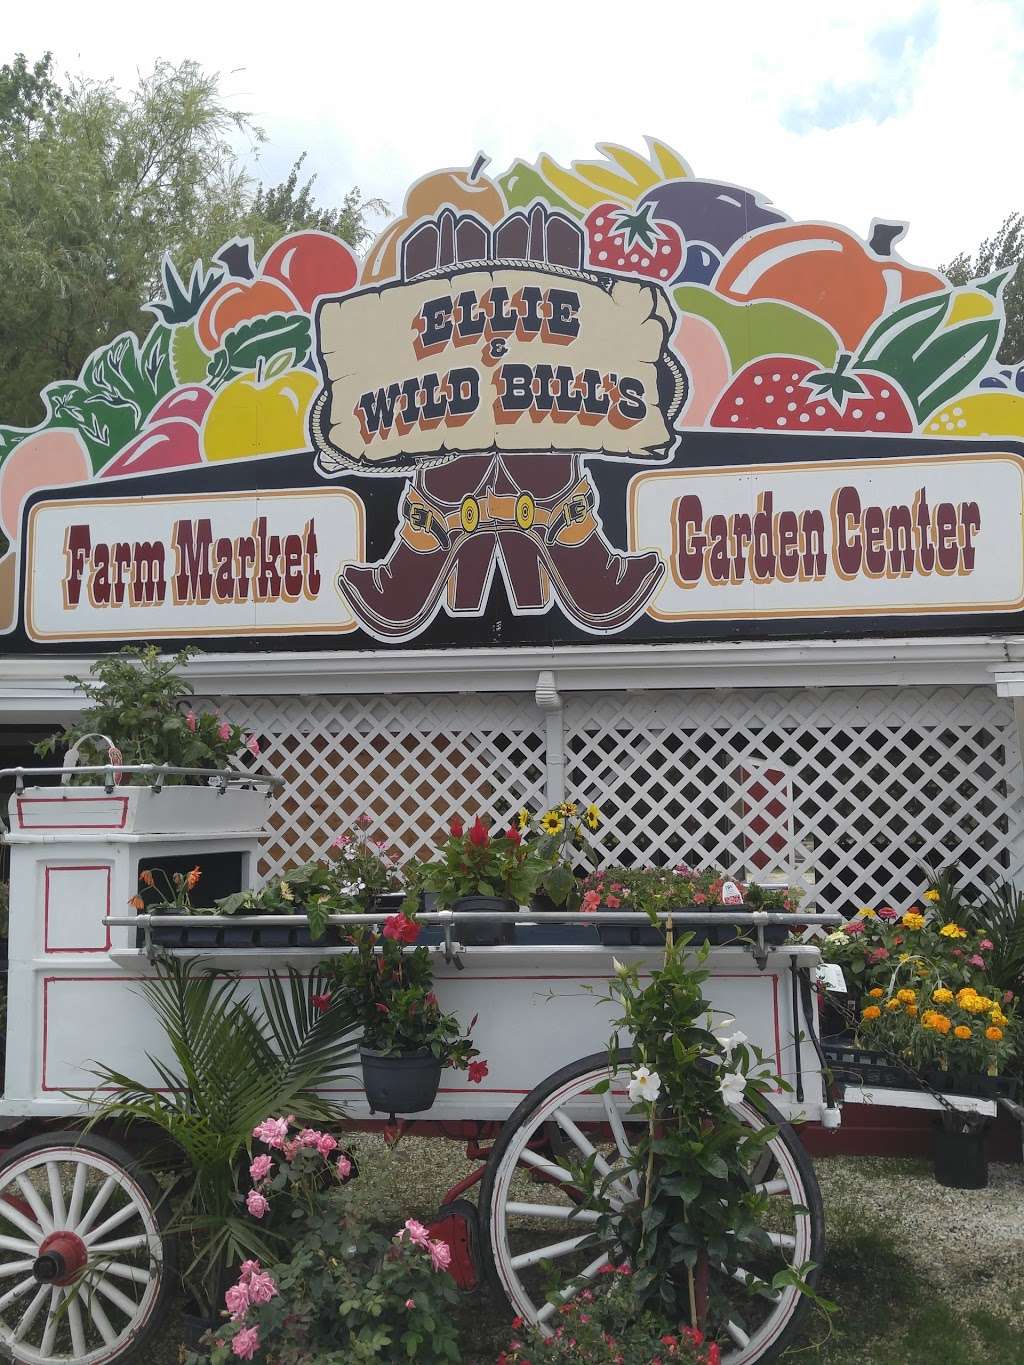 Ellie & Wild Bills Farm Market and Garden Center | 517 S Delsea Dr, Cape May, NJ 08204, USA